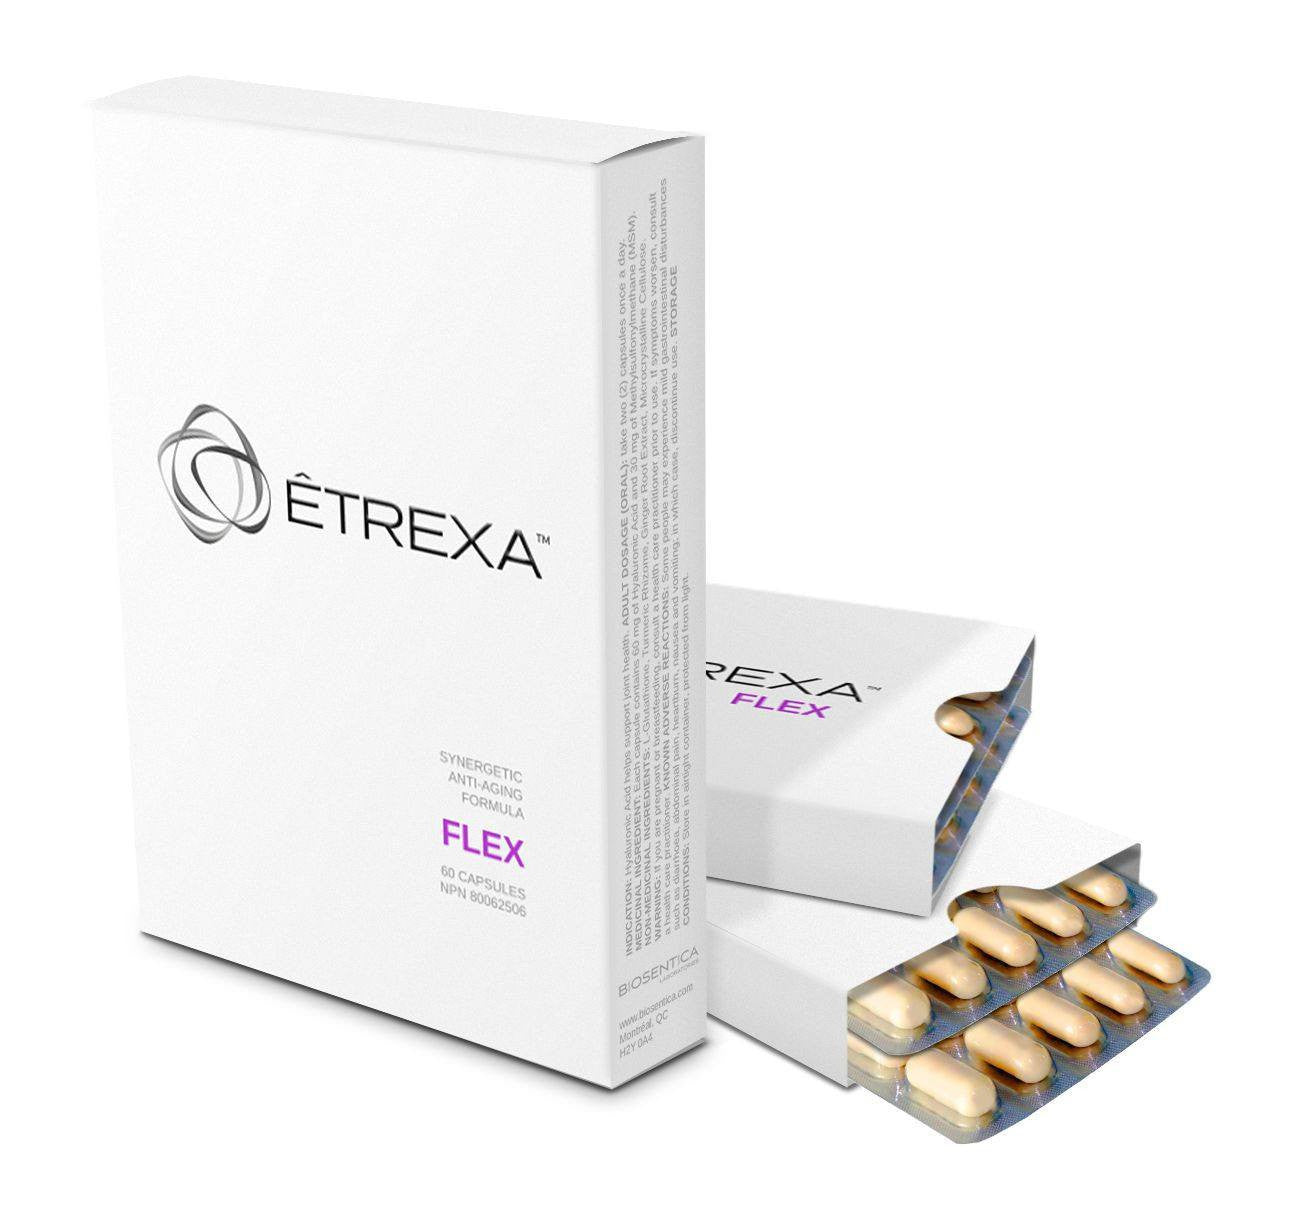 ETREXA FLEX: Joints Health and Flexibility